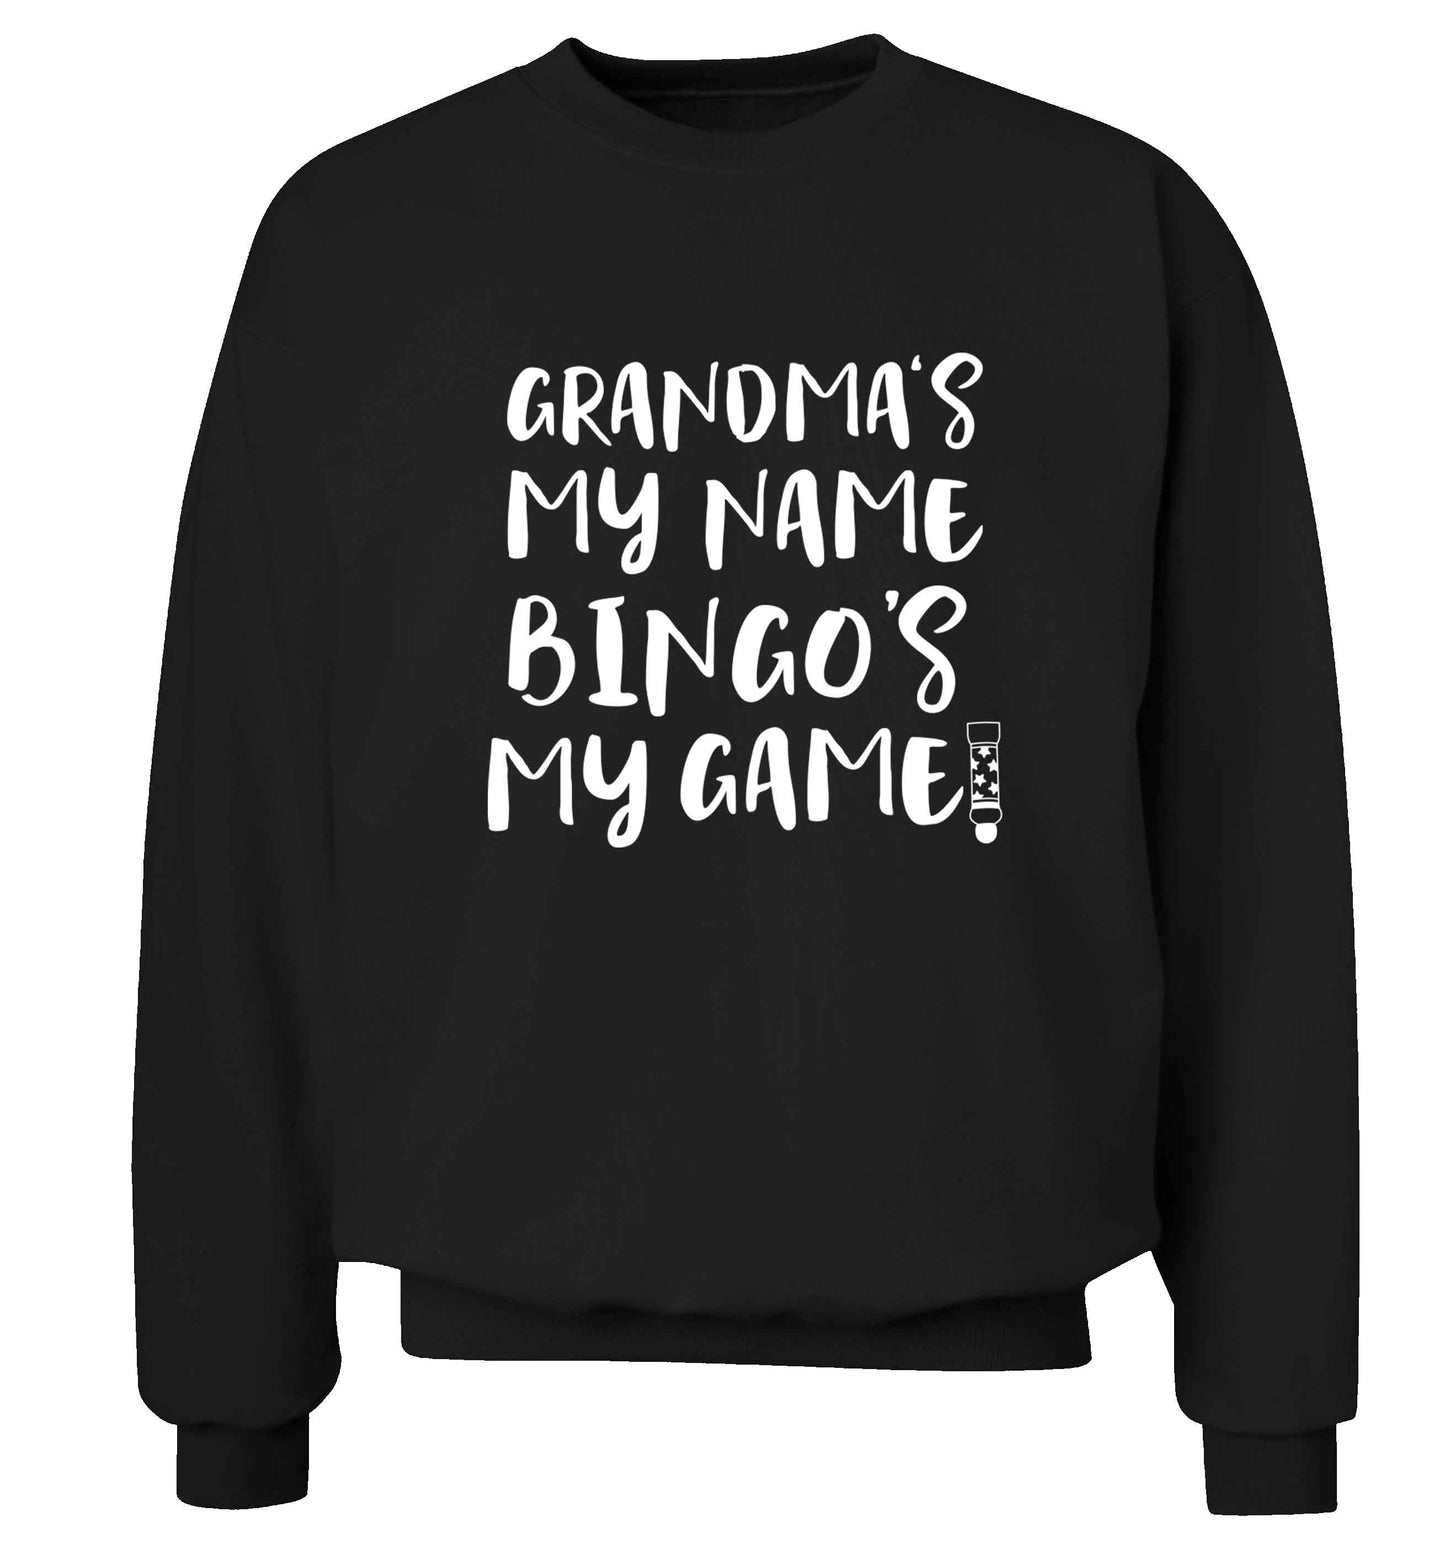 Grandma's my name bingo's my game! Adult's unisex black Sweater 2XL